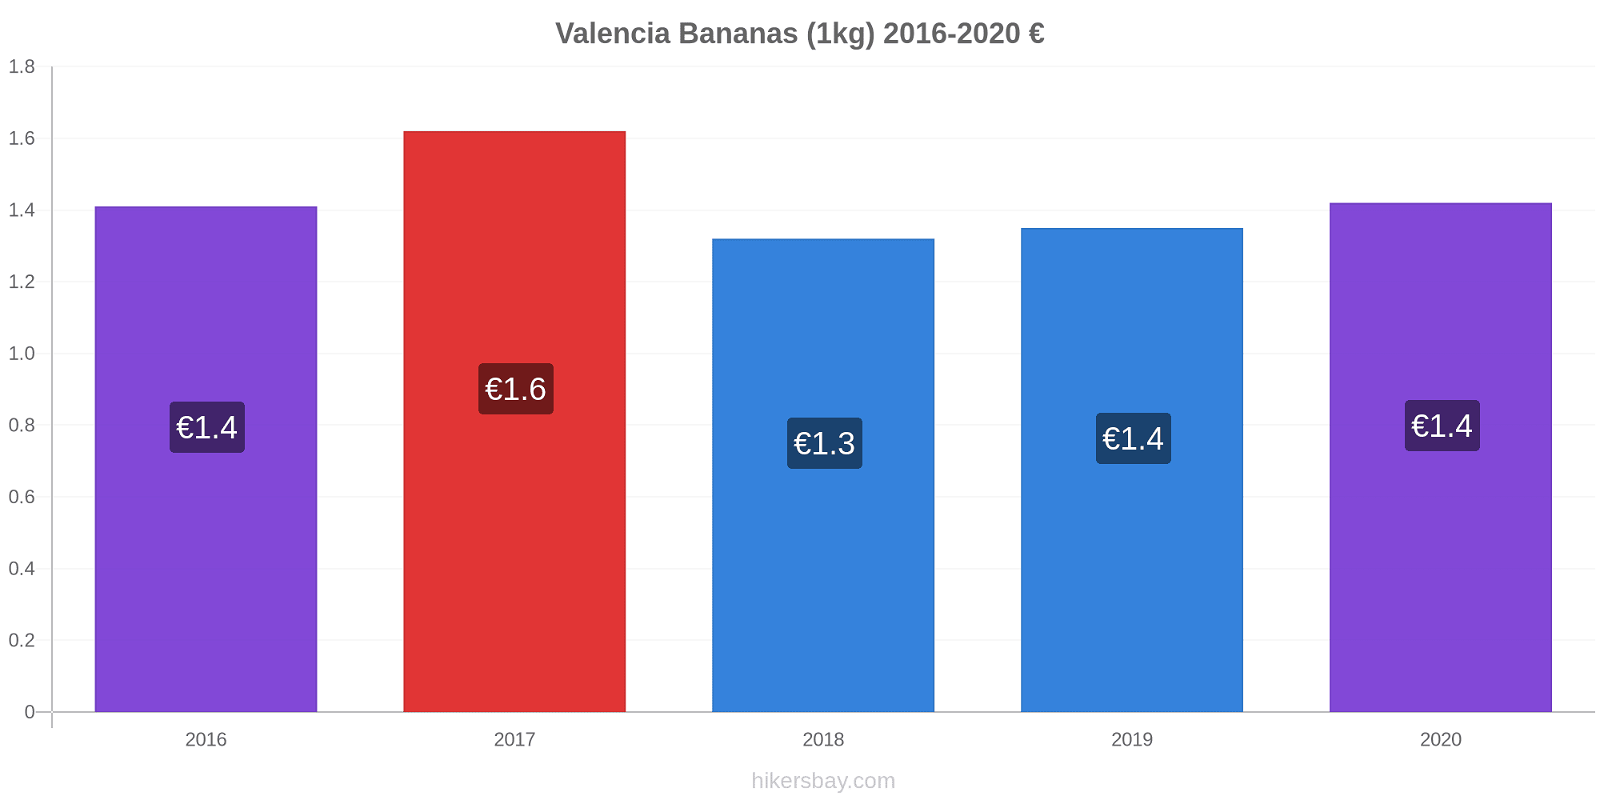 Valencia price changes Bananas (1kg) hikersbay.com